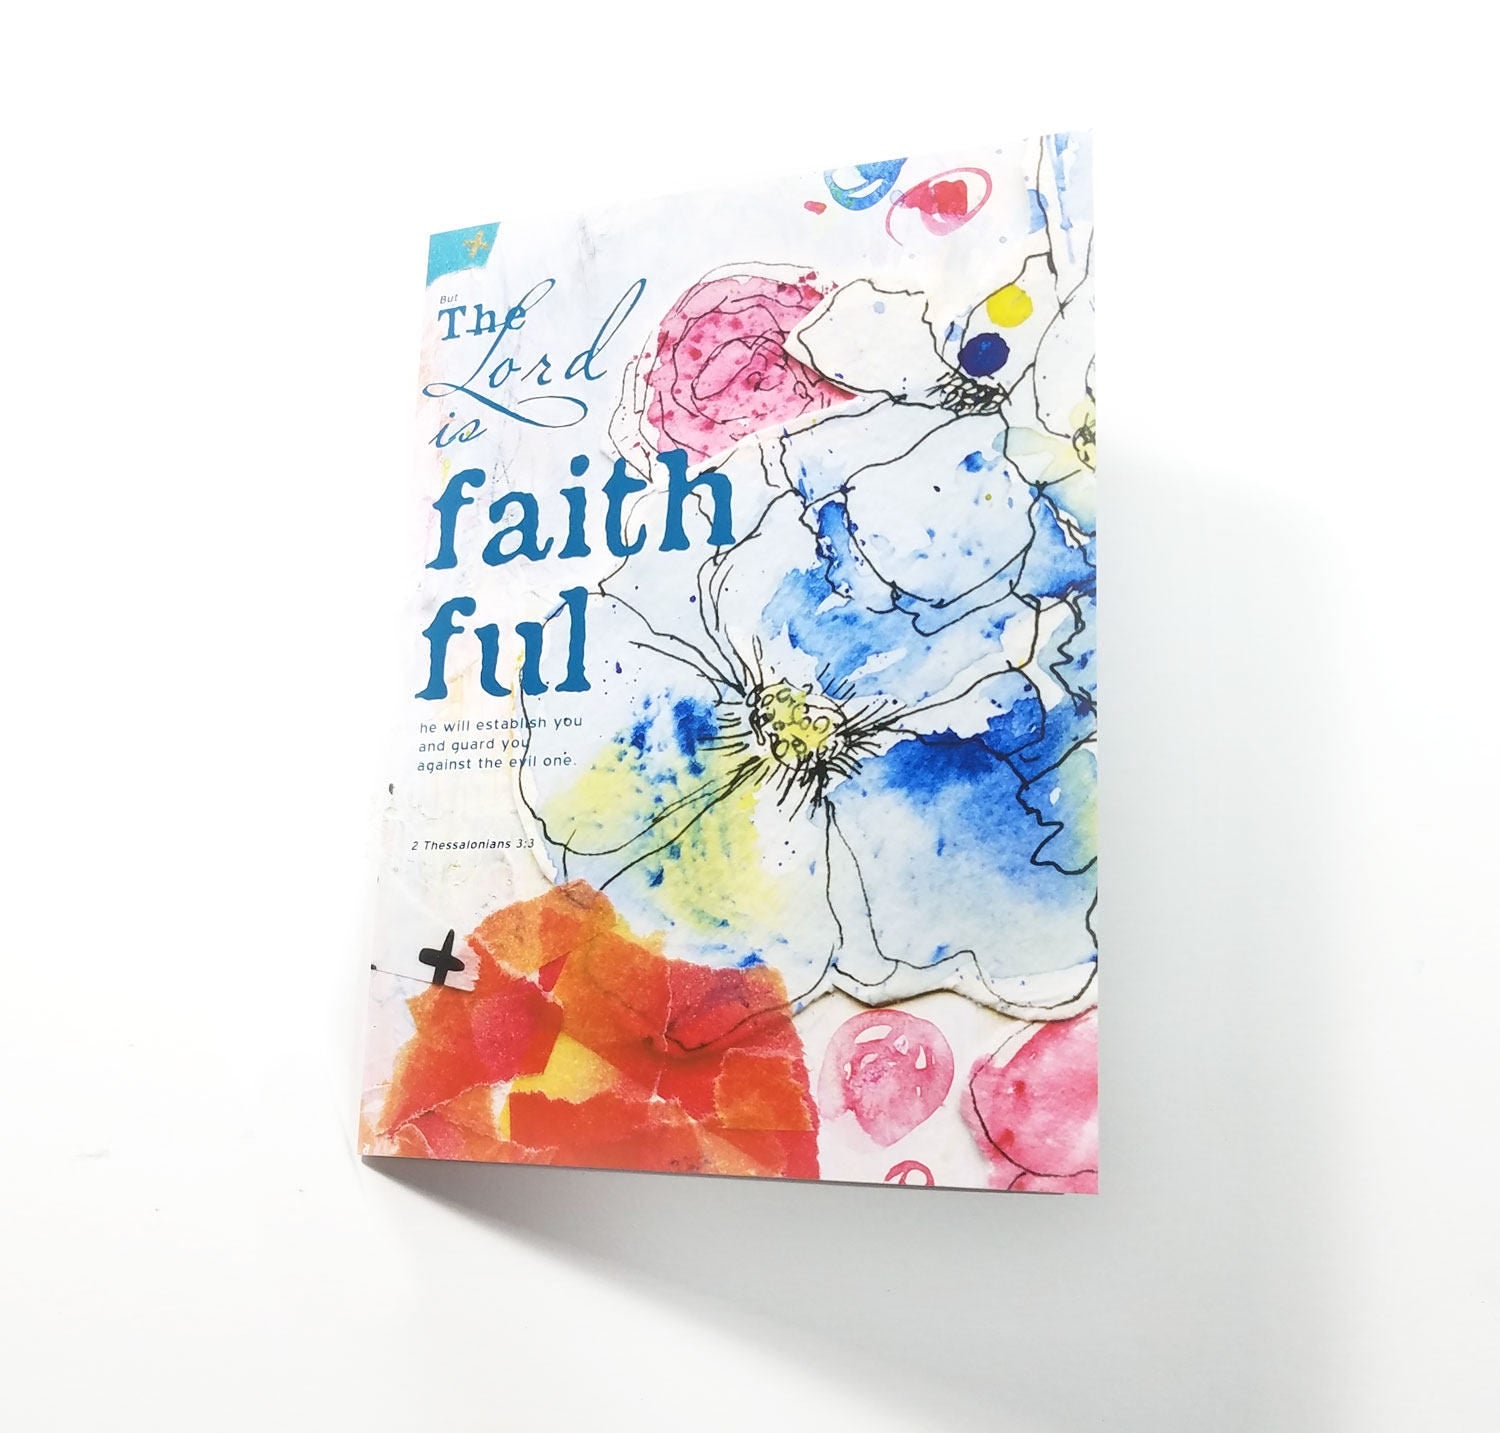 Set of 5 faith cards, greeting cards 5x7